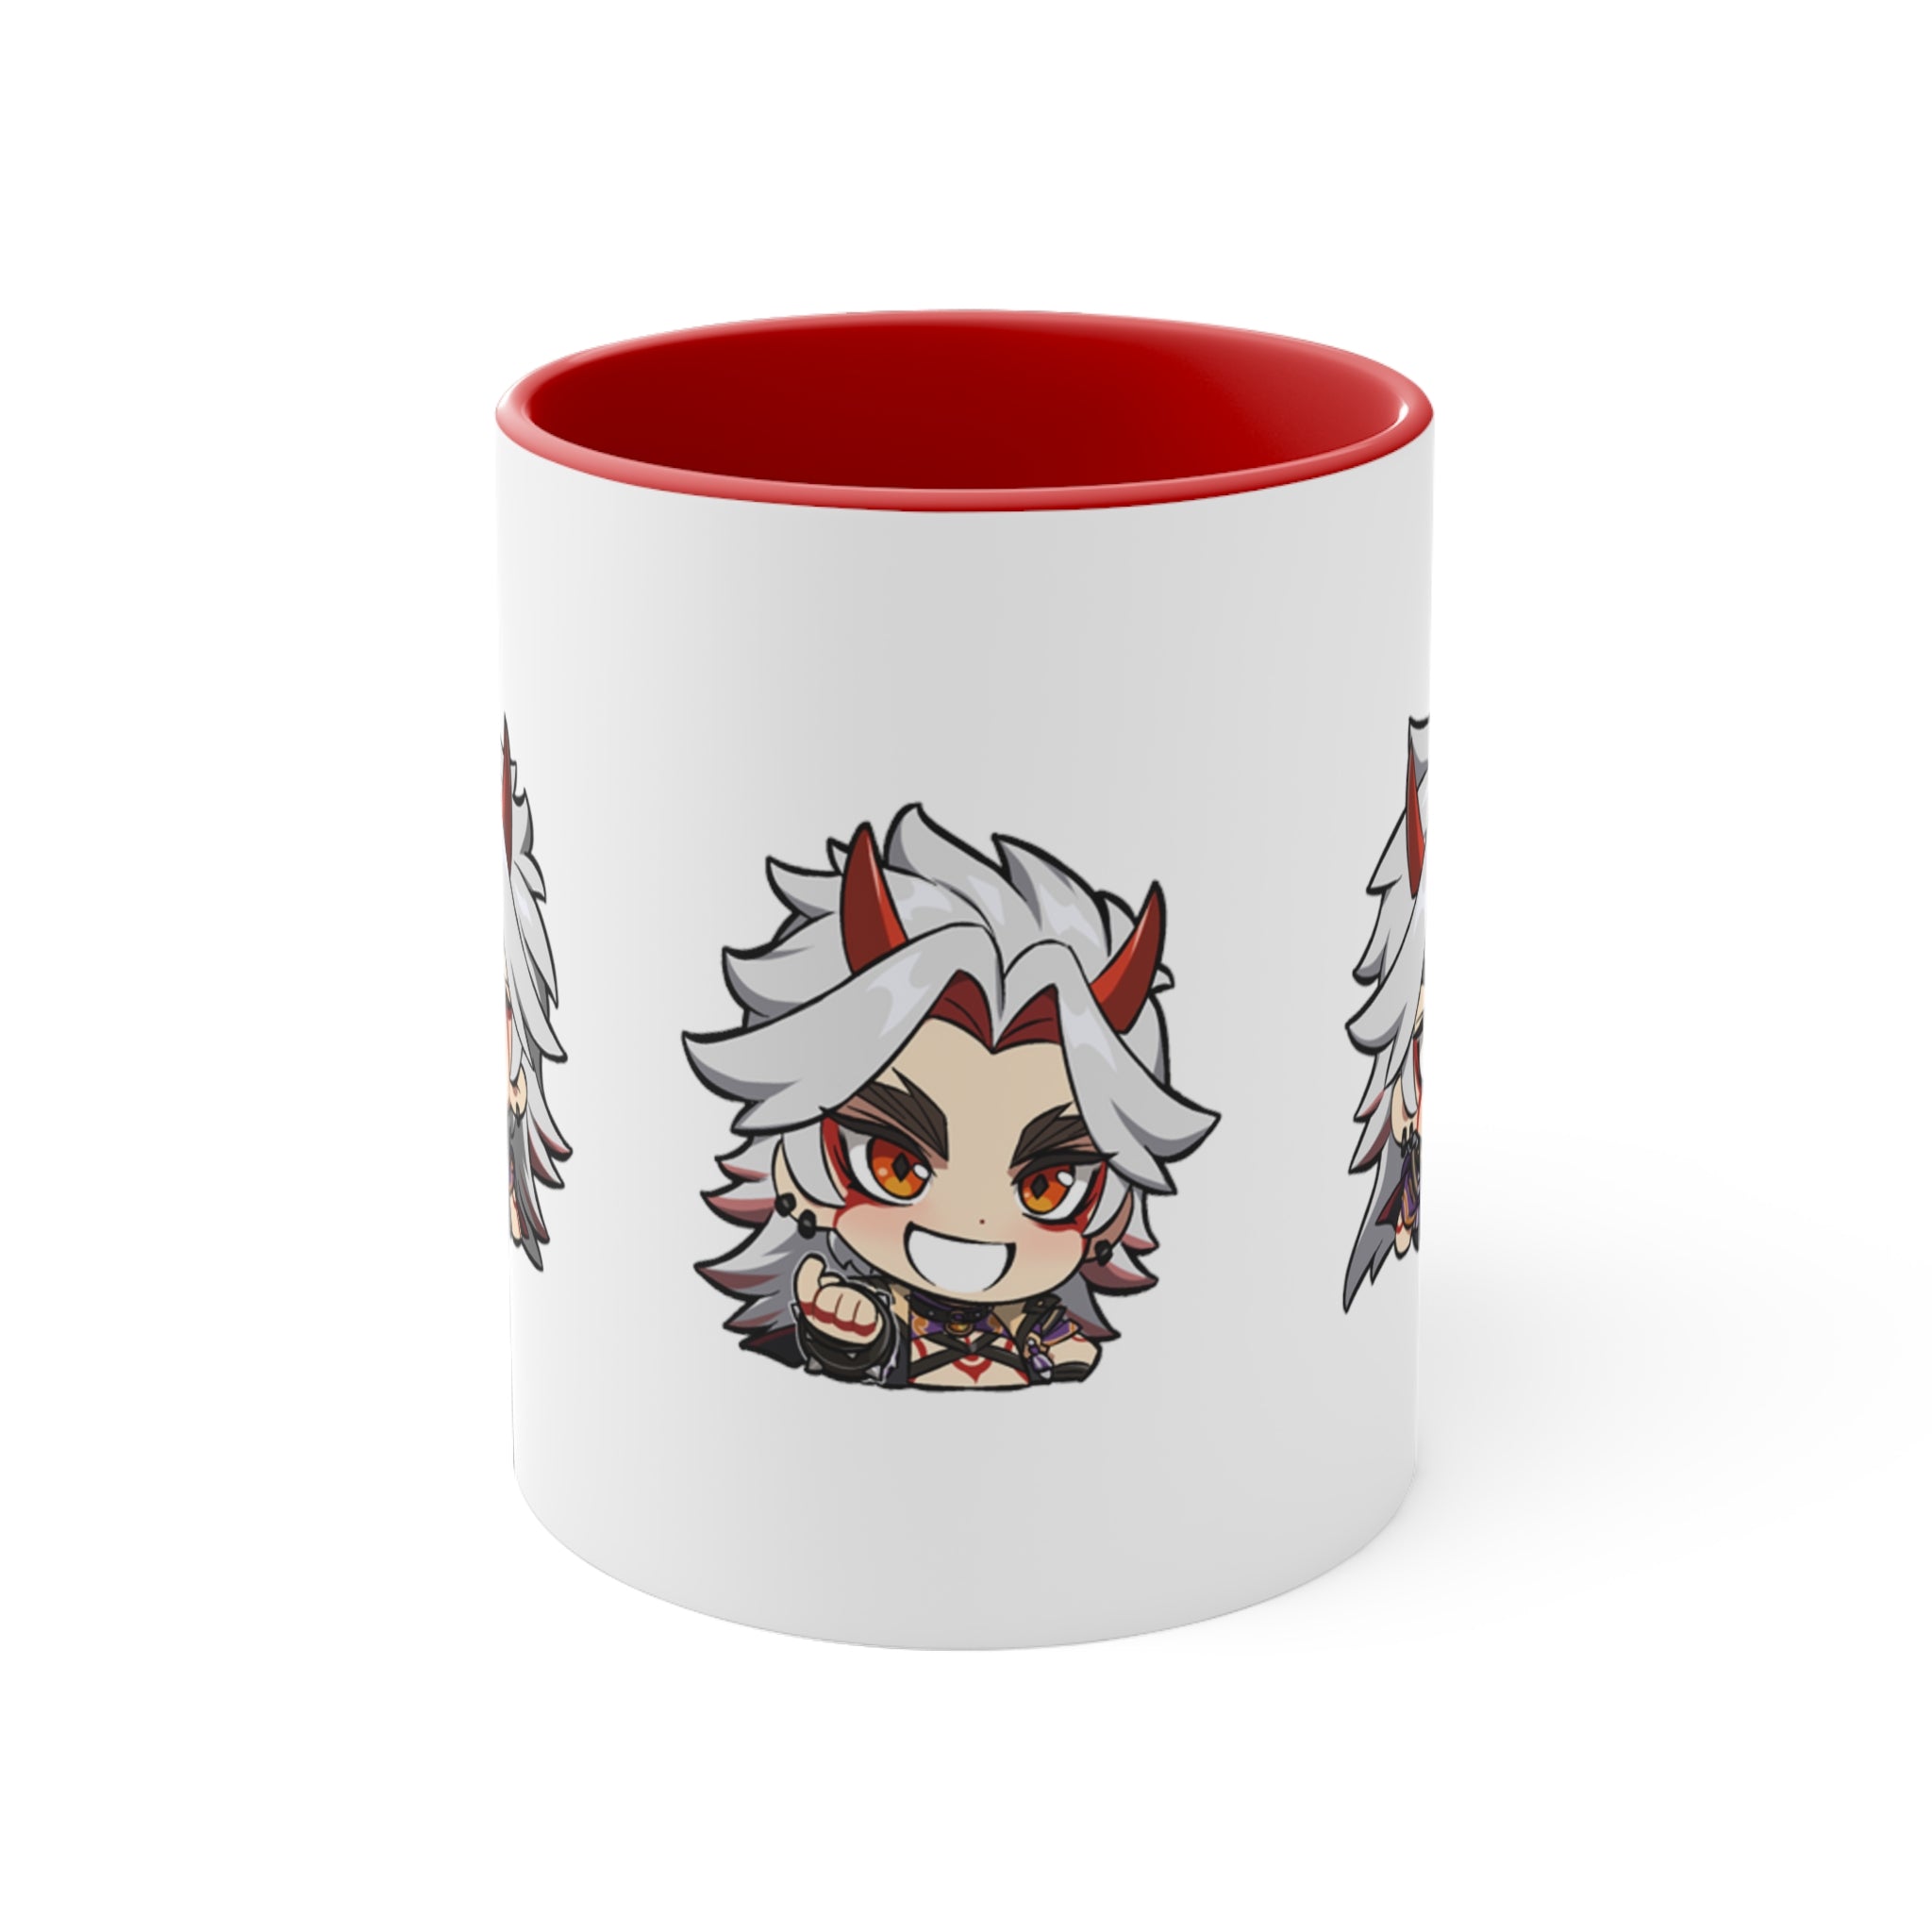 Arataki Itto Genshin Impact Accent Coffee Mug, 11oz Cups Mugs Cup Gift For Gamer Gifts Game Anime Fanart Fan Birthday Valentine's Christmas